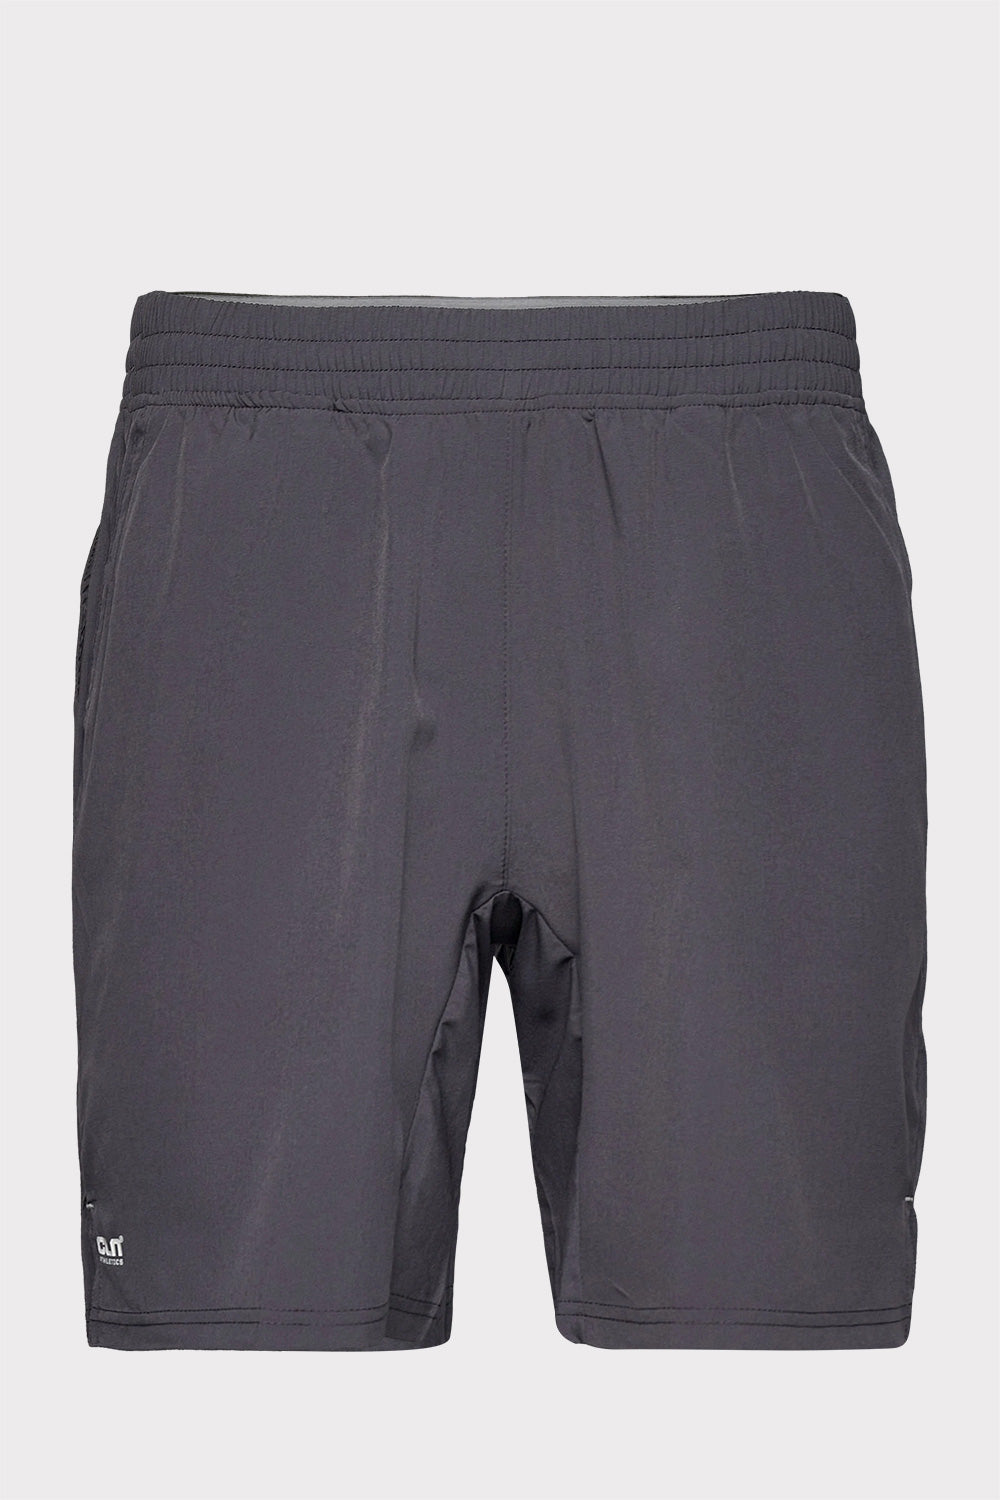 CLN Transform Shorts - Graphite